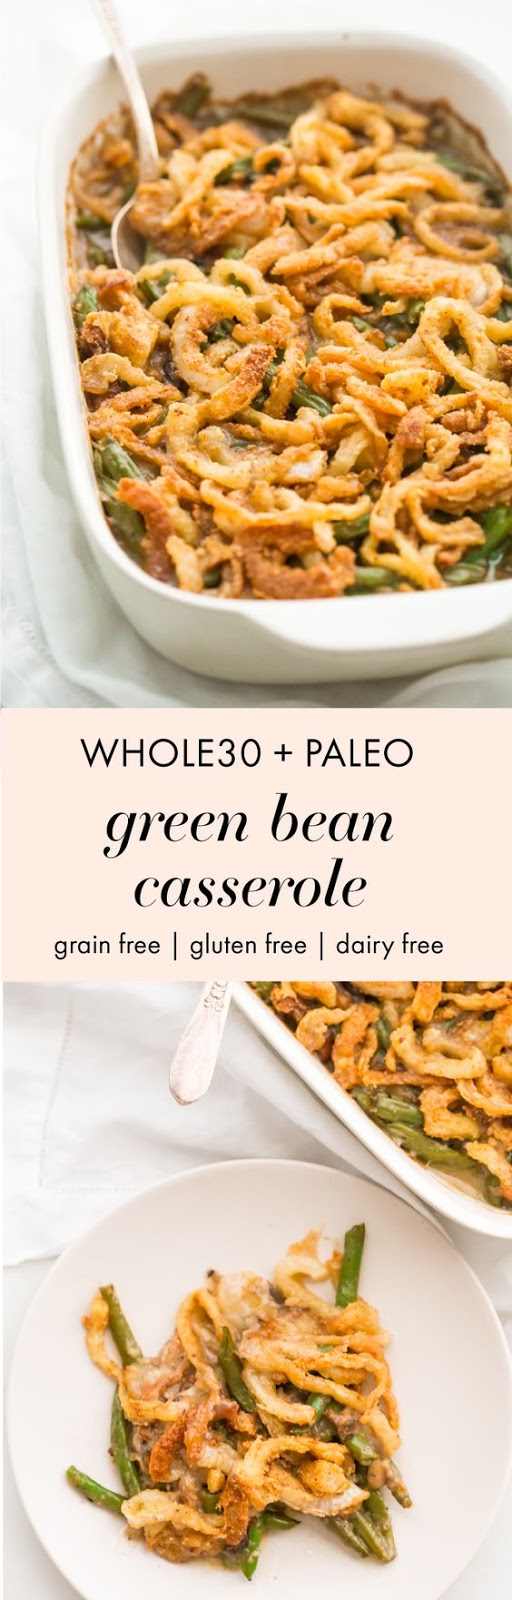 Whole30 Green Bean Casserole | Sahara's Cooking